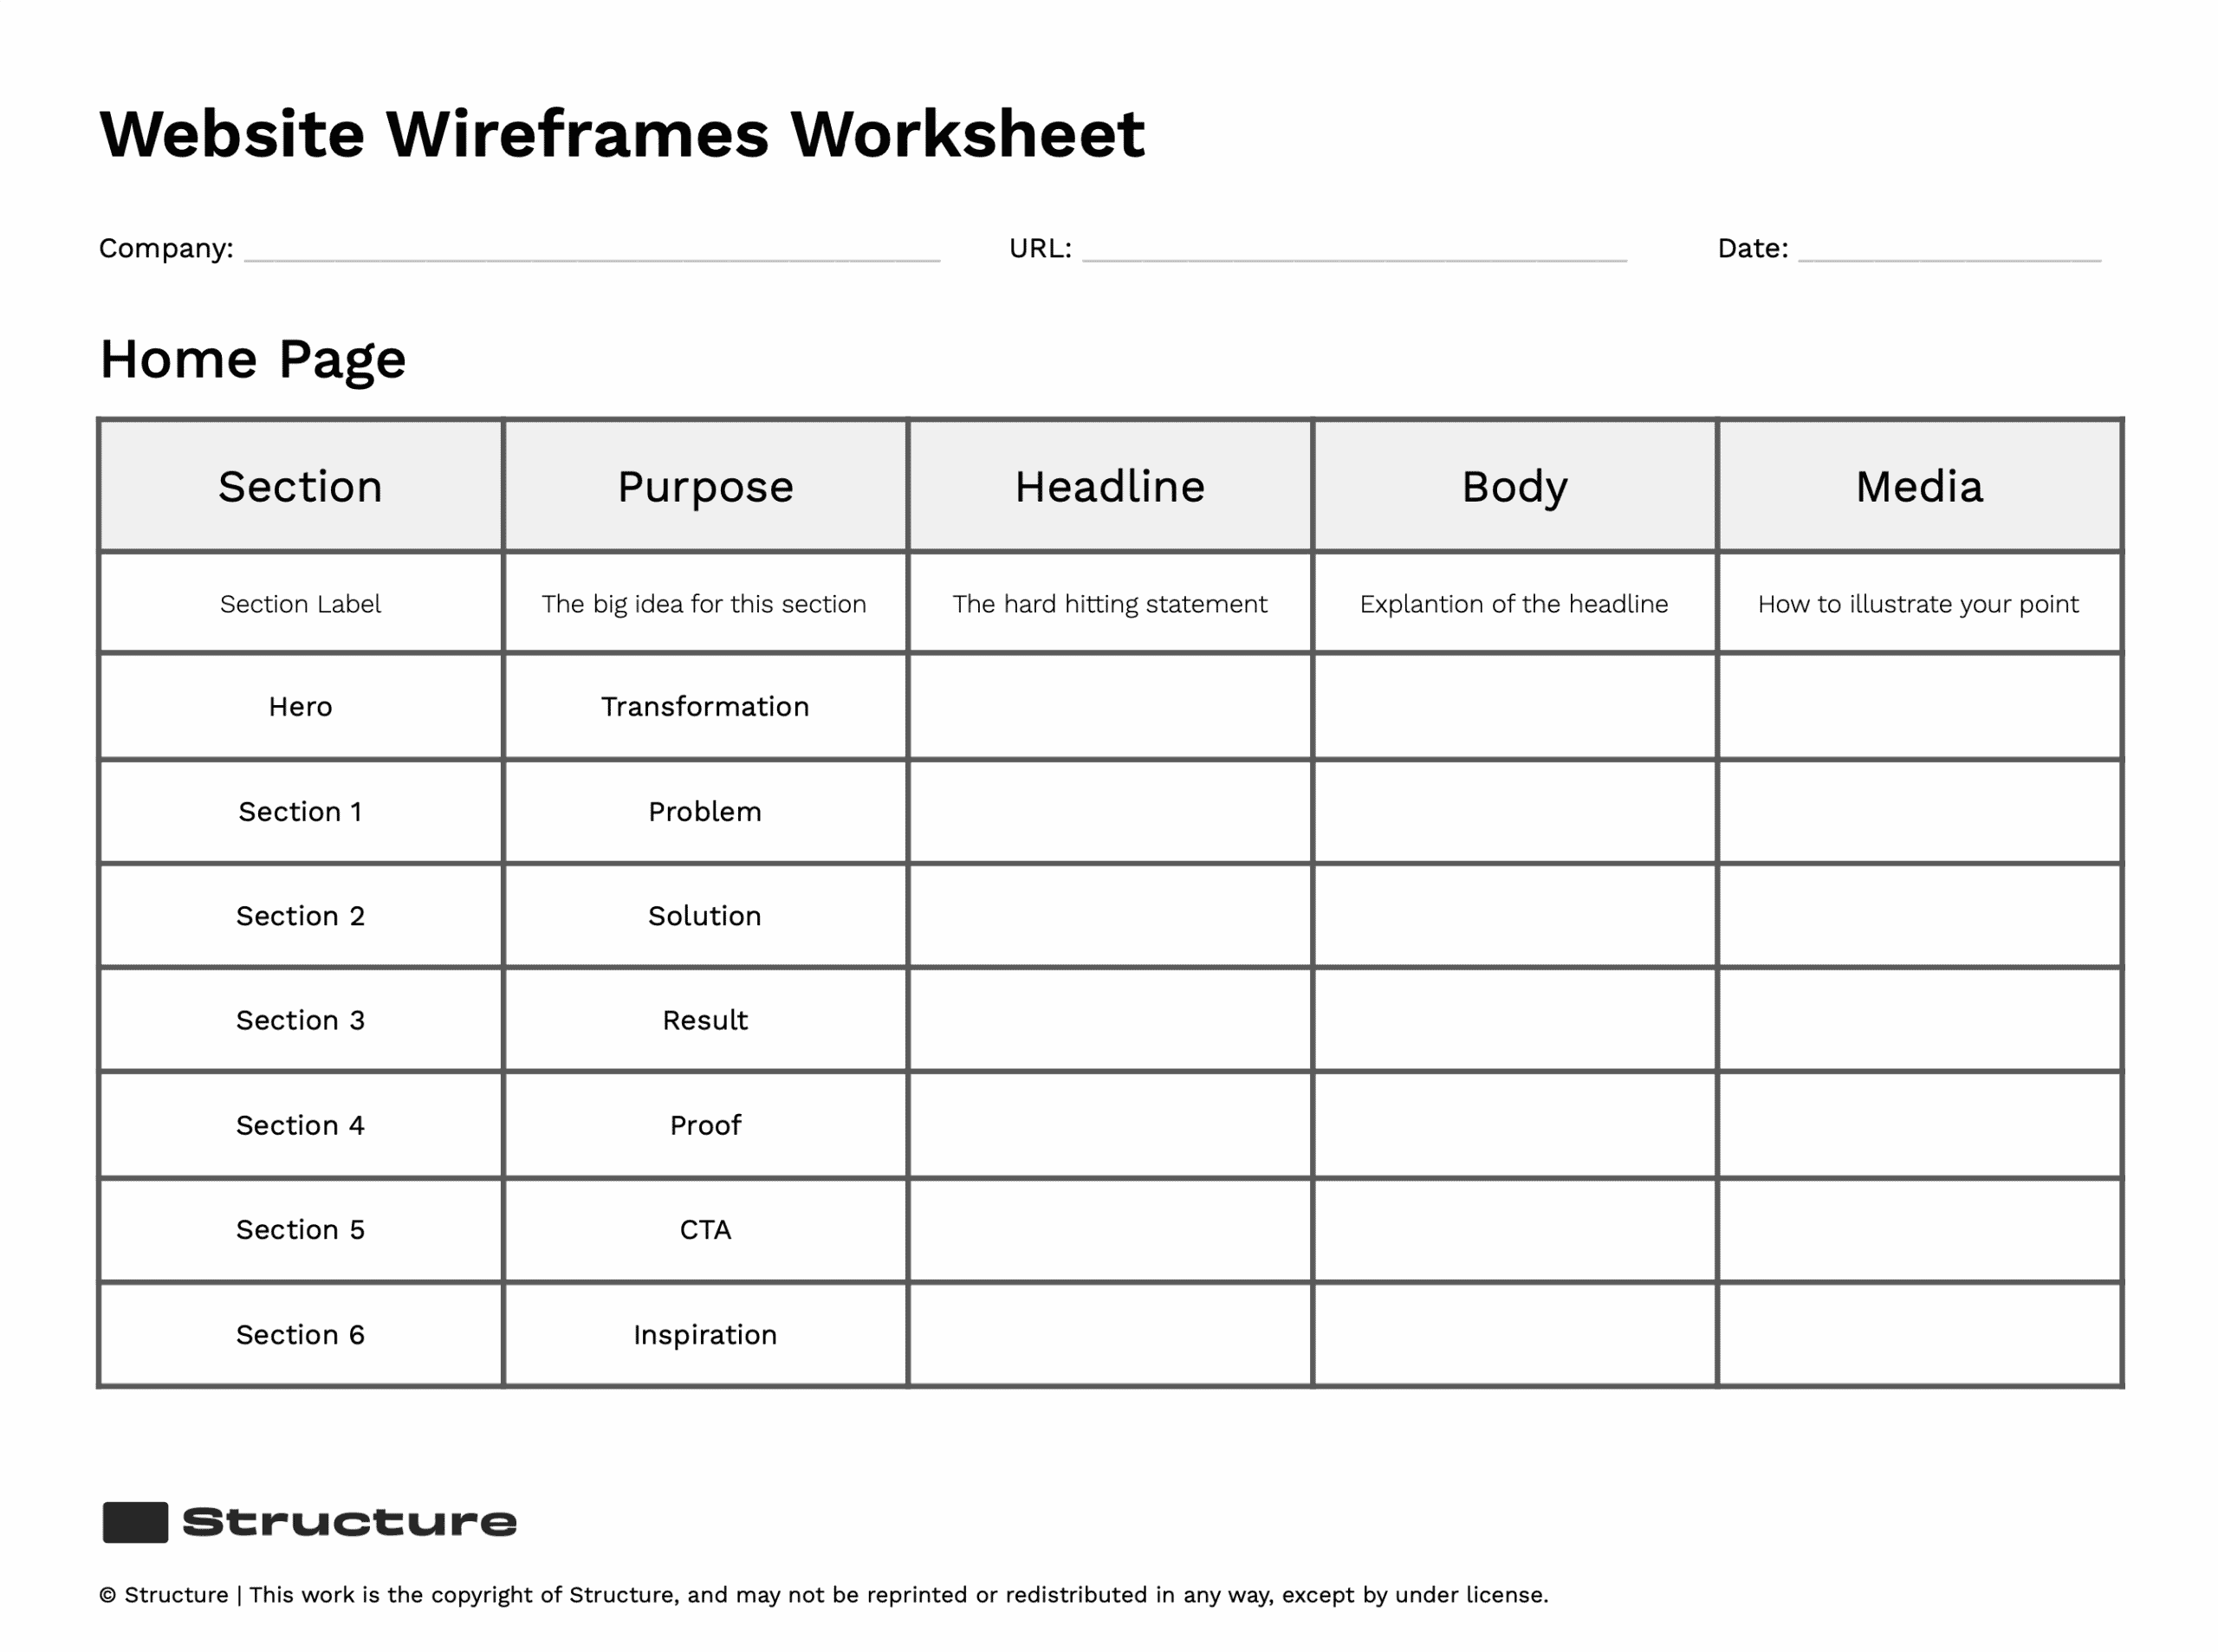 Website Wireframes Worksheet